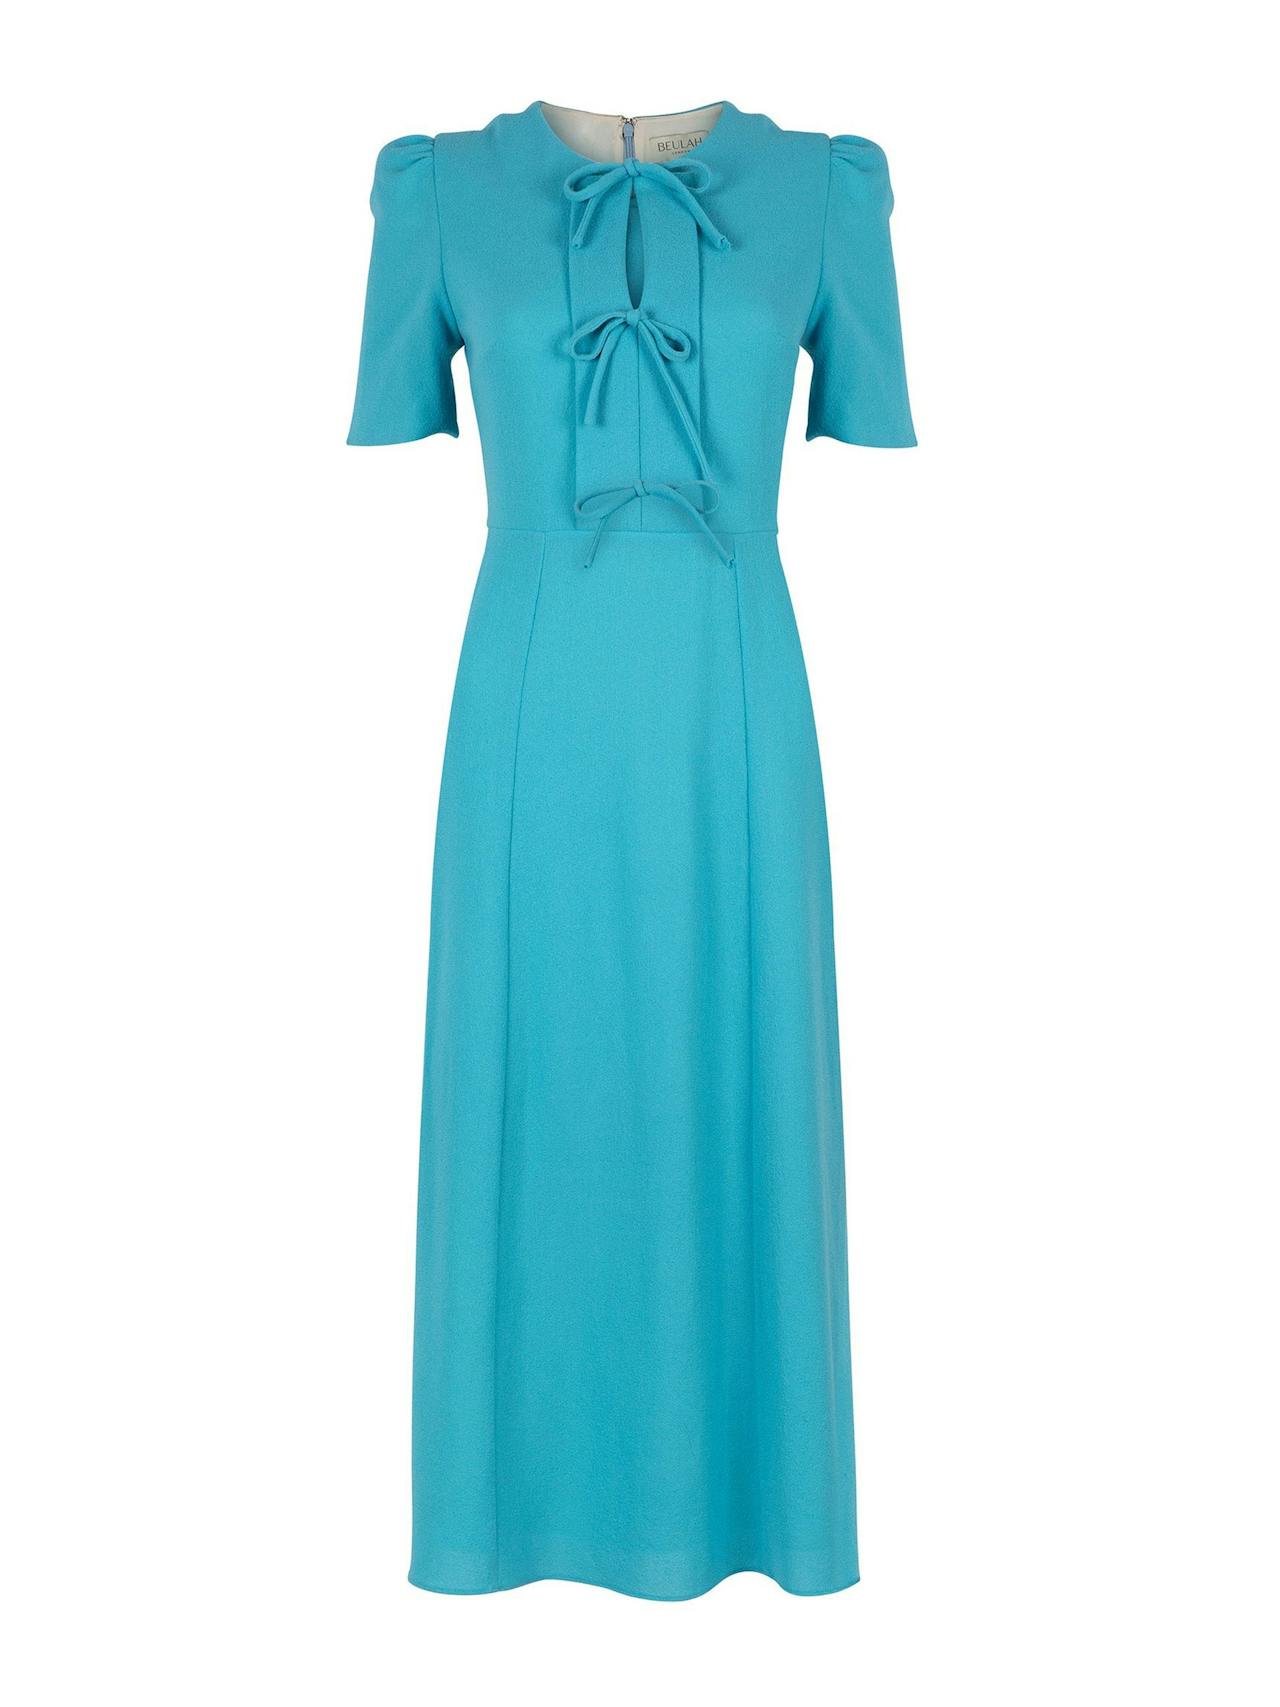 Bright blue Serena dress